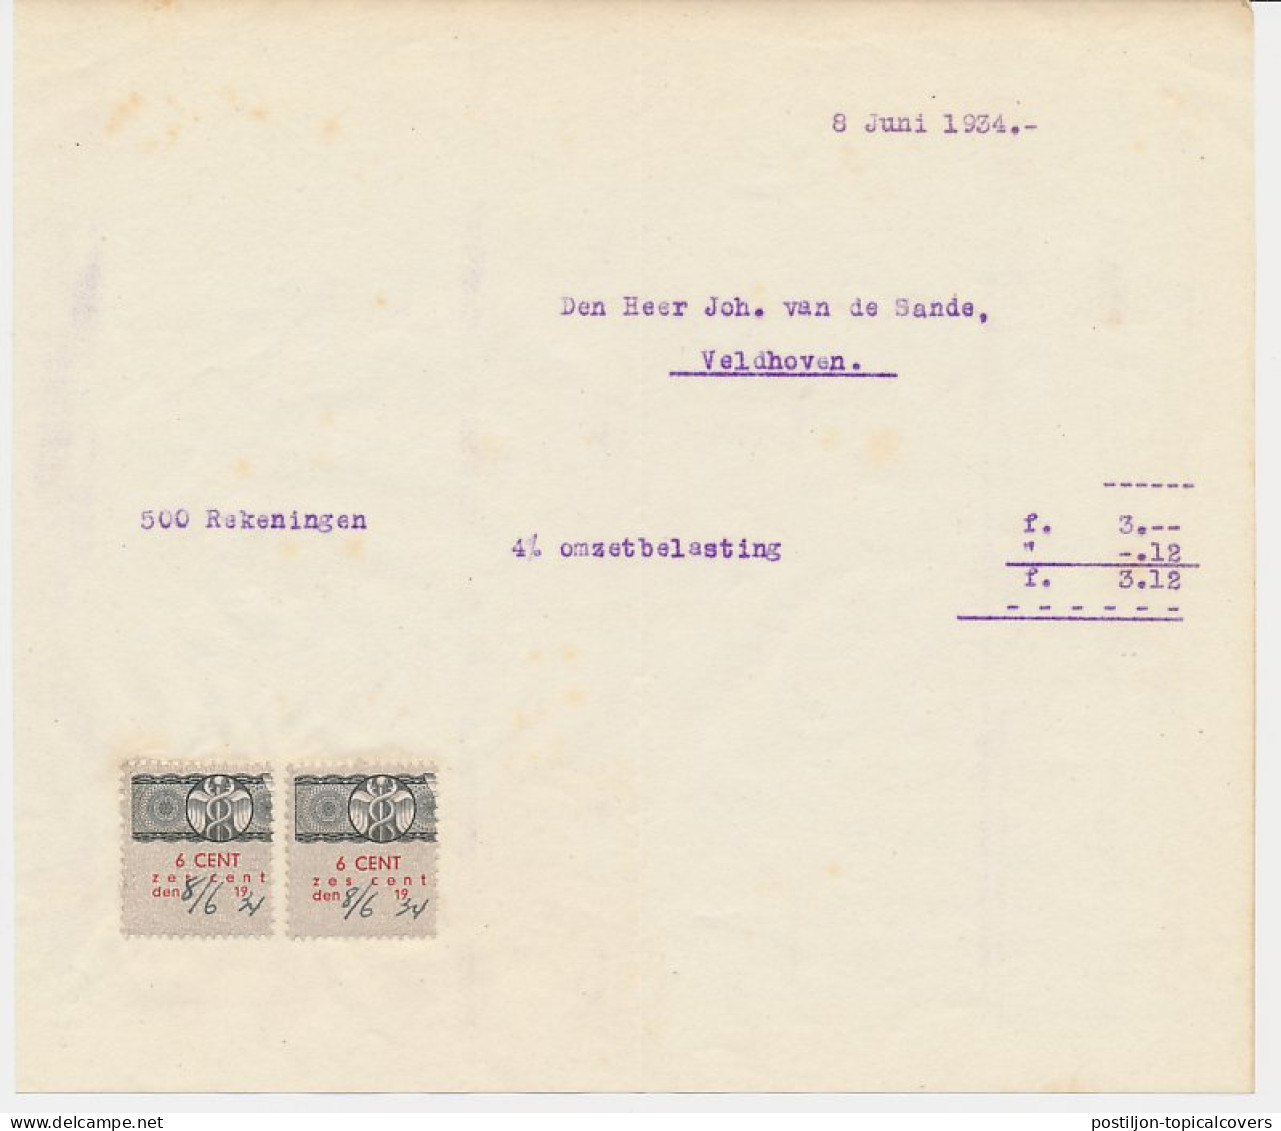 Omzetbelasting 6 CENT - Veldhoven 1934 - Revenue Stamps